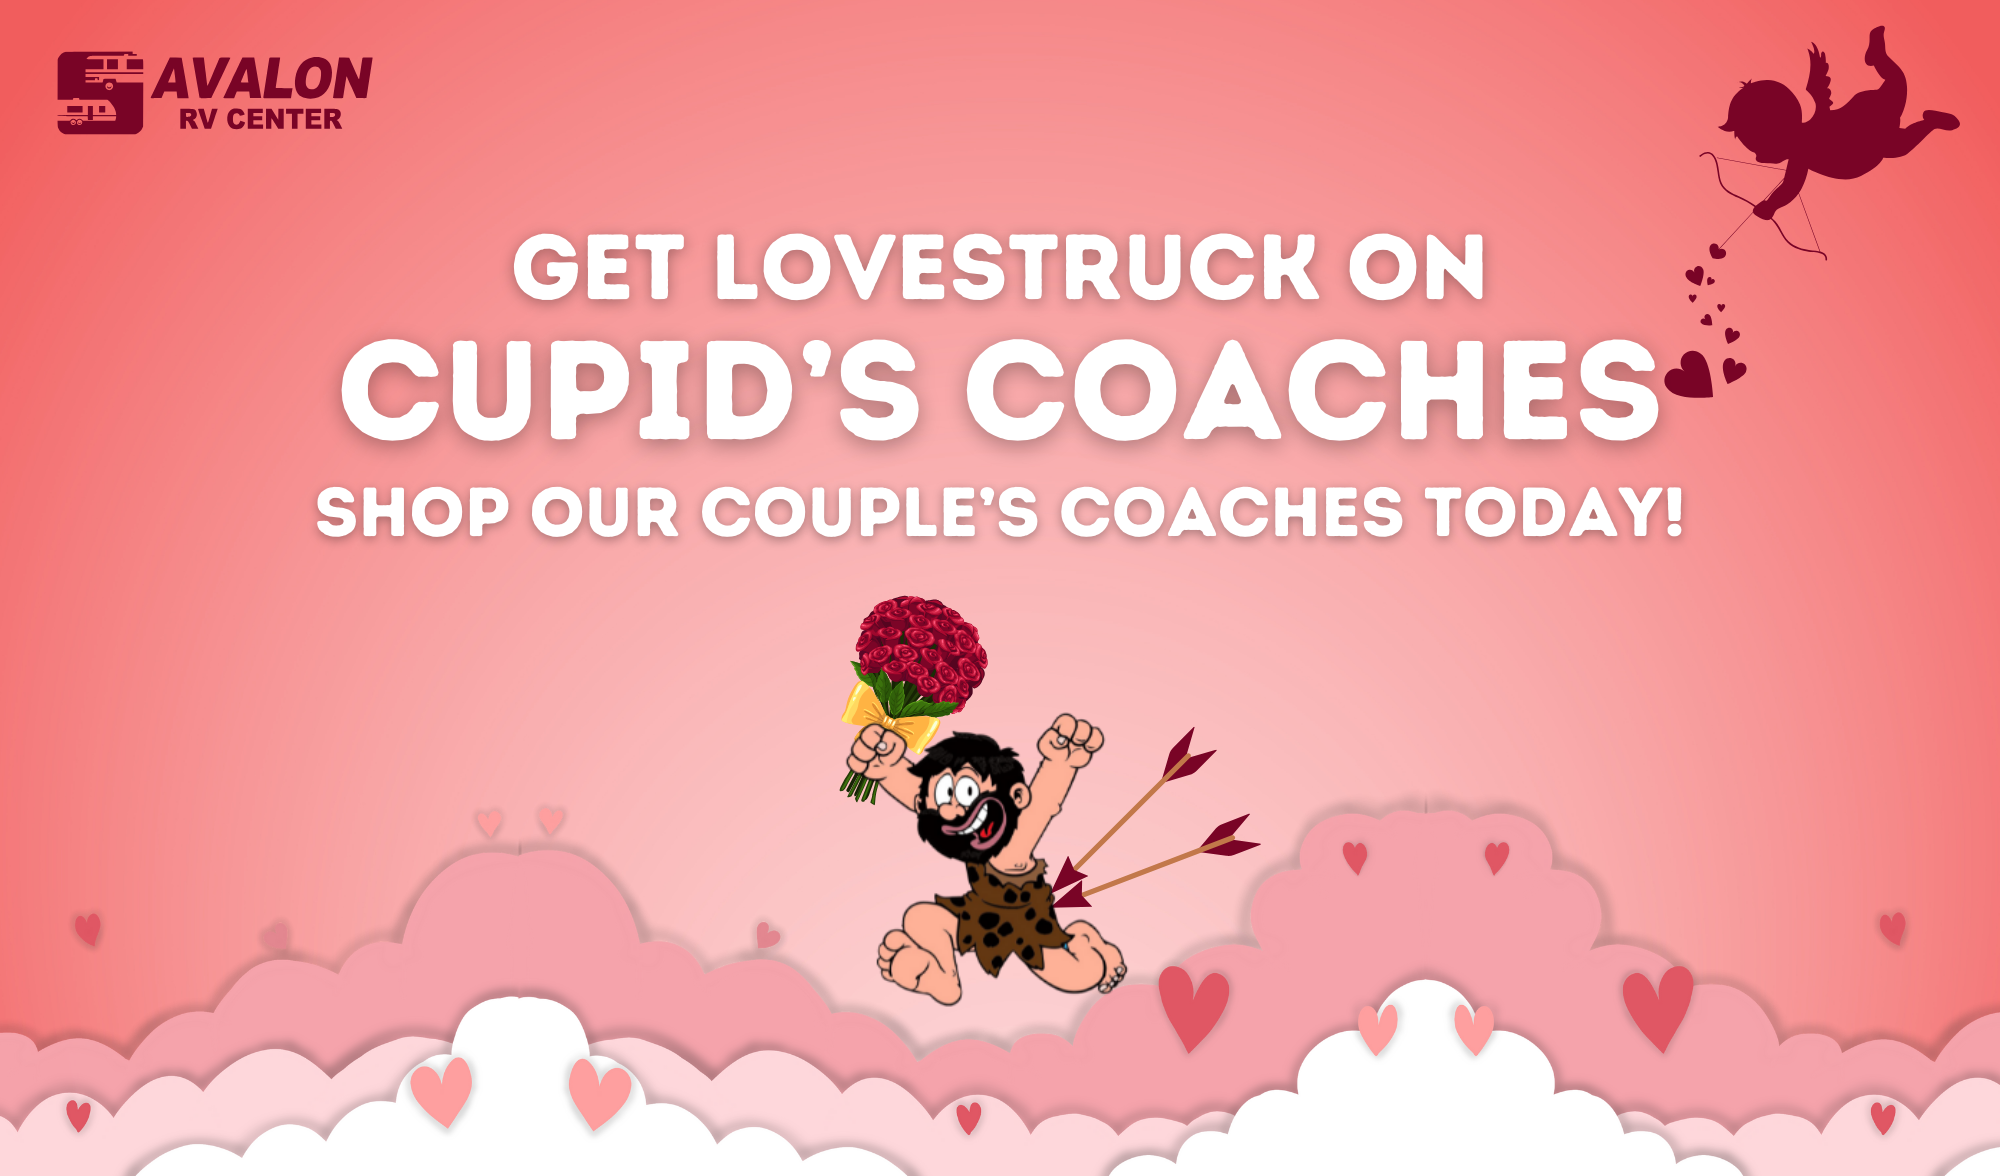 Cupid's Coaches